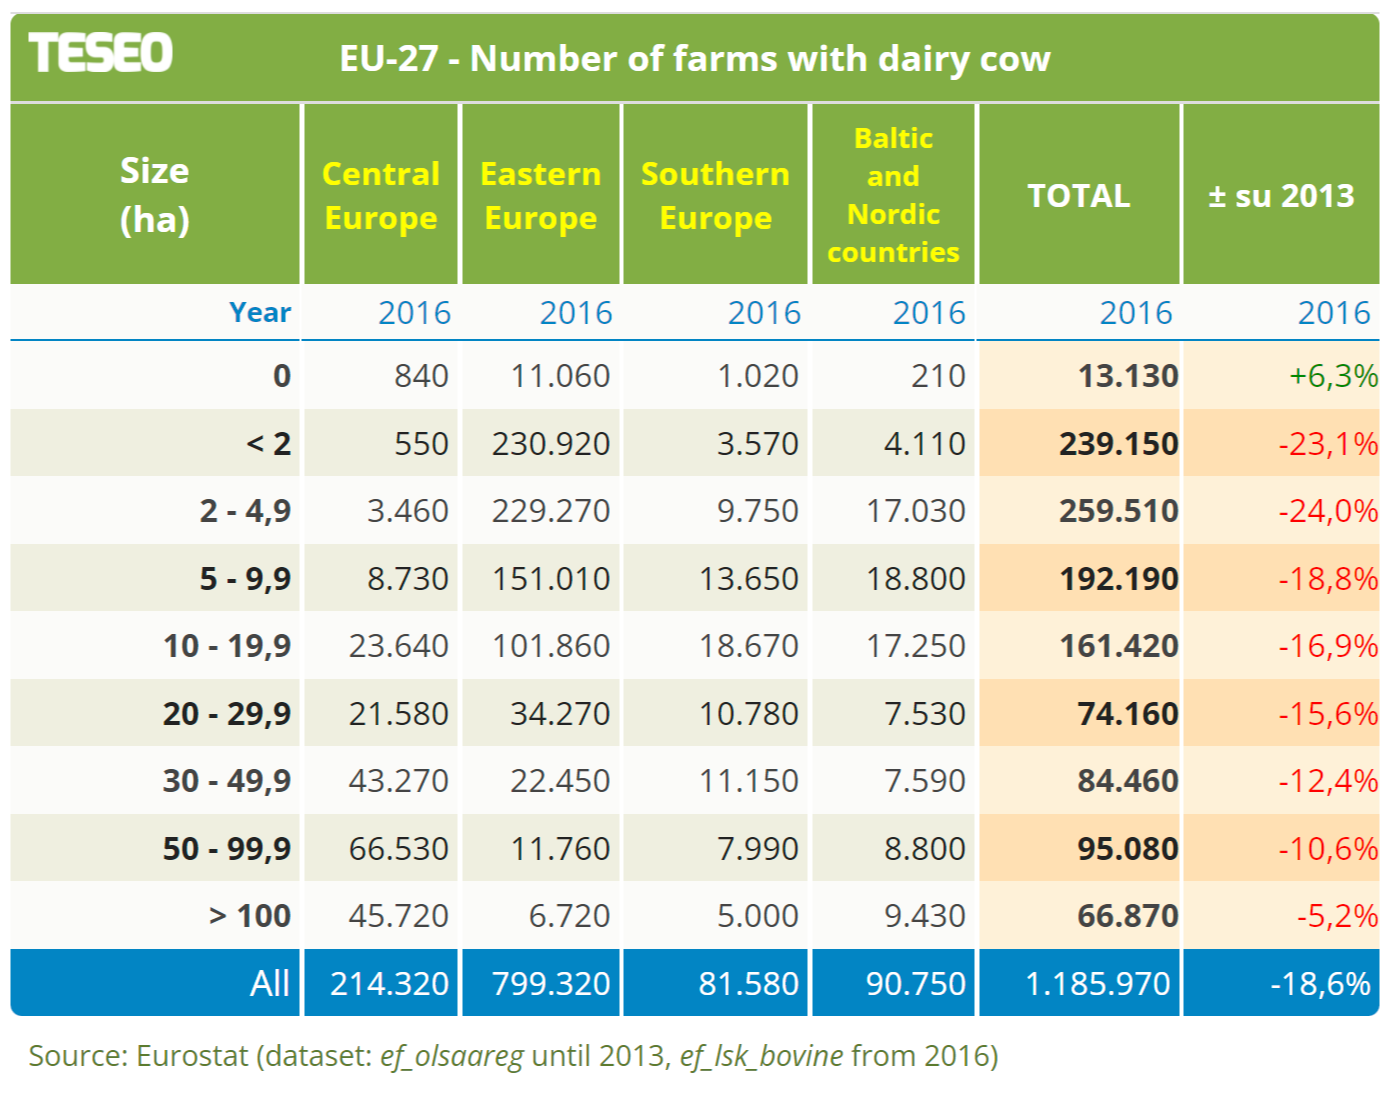 TESEO.clal.it – EU-27 Dairy Farm Structure